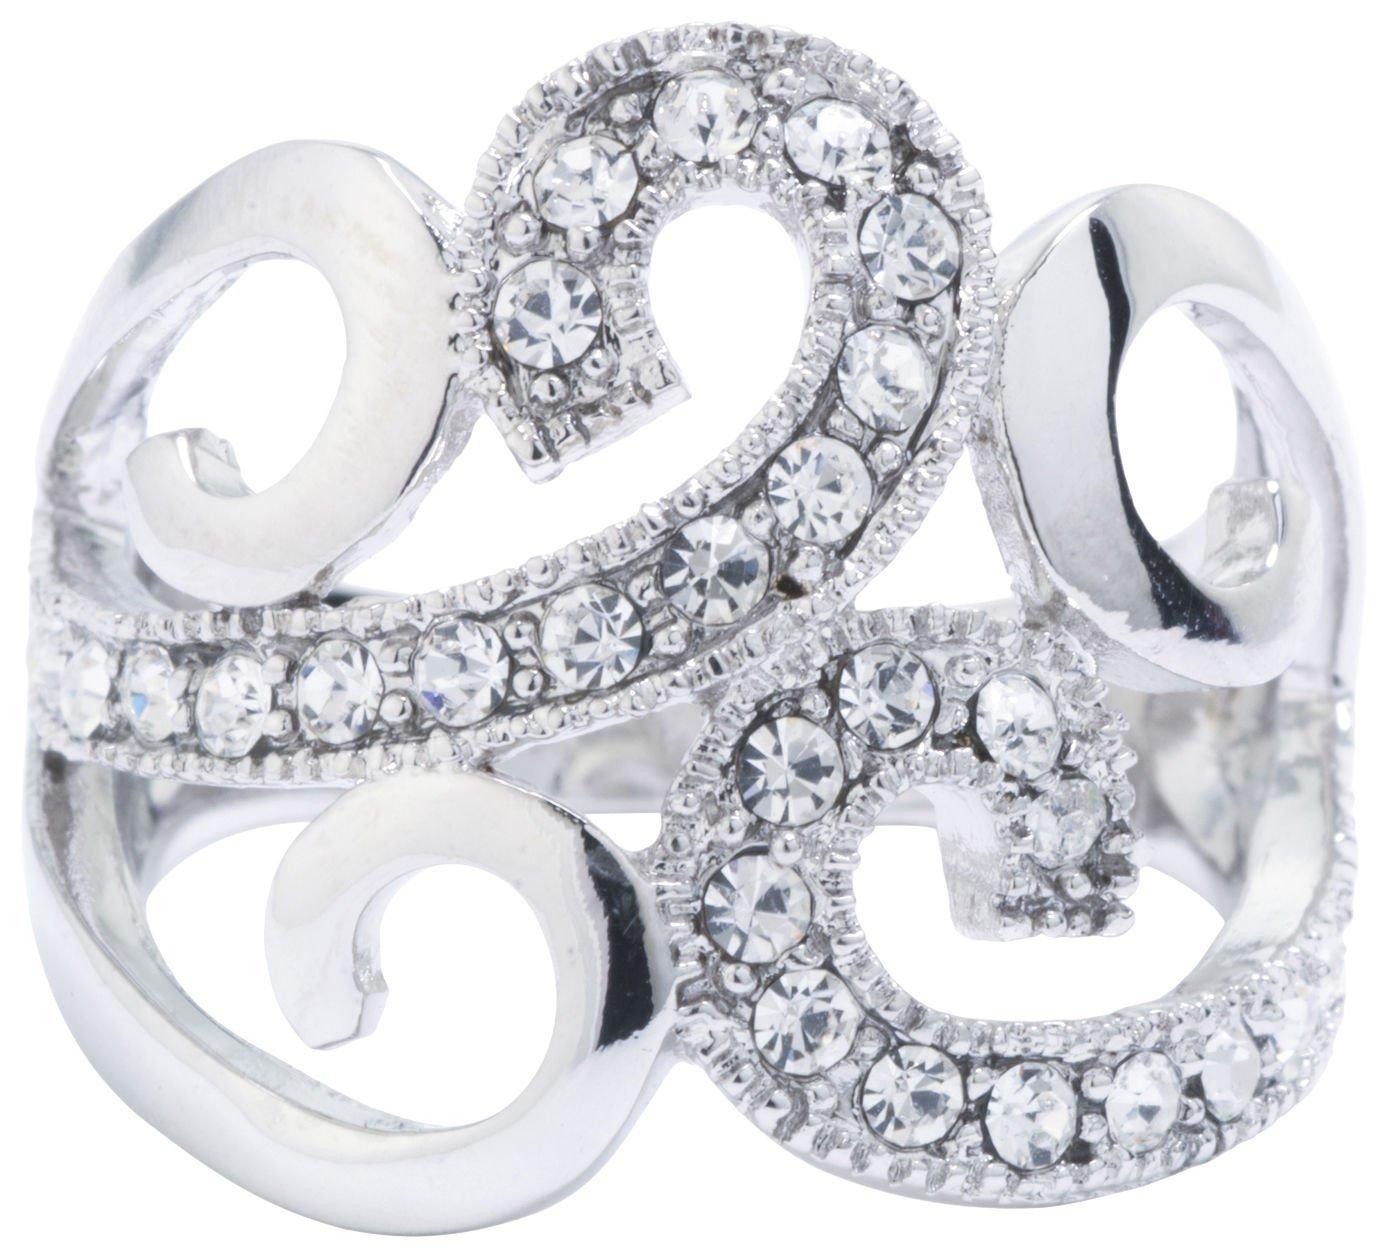 Silver Tone Cubic Zirconia Swirl Ring